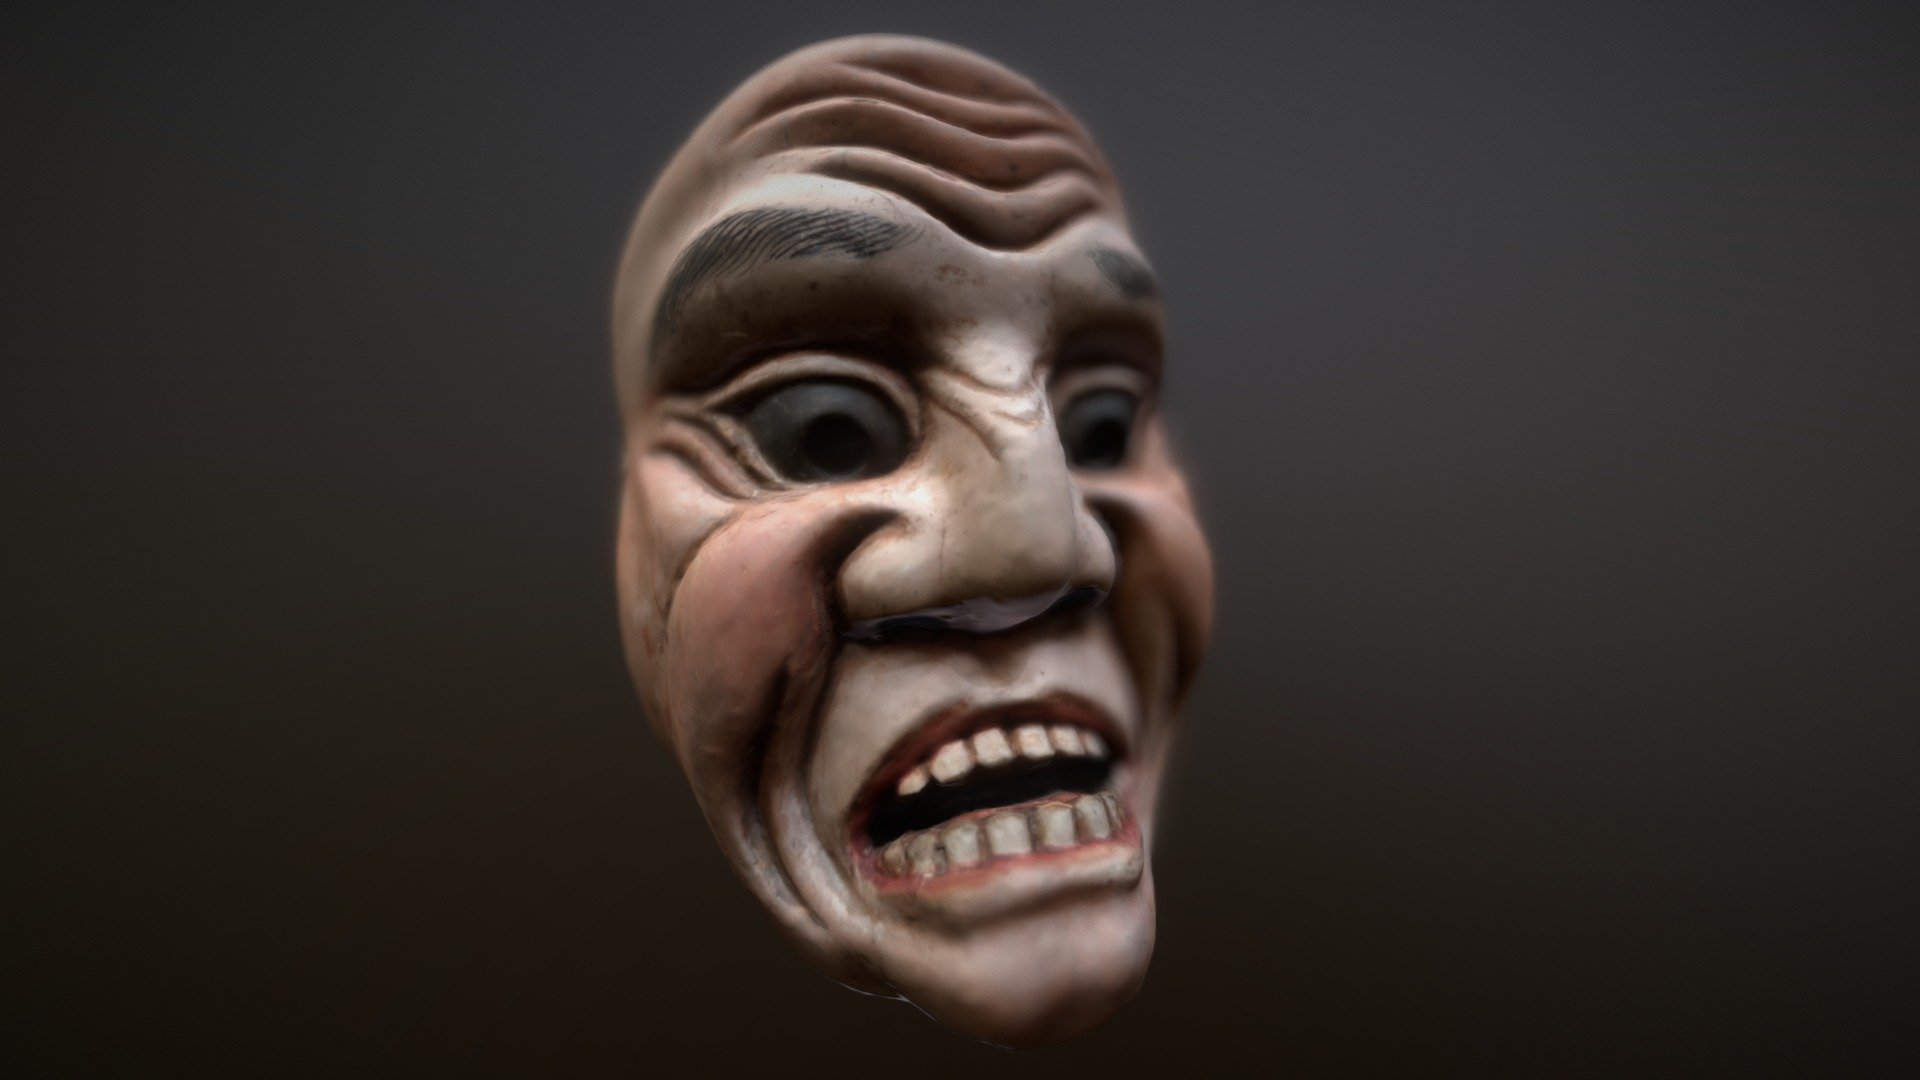 https://fr.wikipedia.org/wiki/Masques_du_th%C3%A9%C3%A2tre_japonais - Masque du théâtre japonais - 3D model by nzo (@nzo3d) 3d model